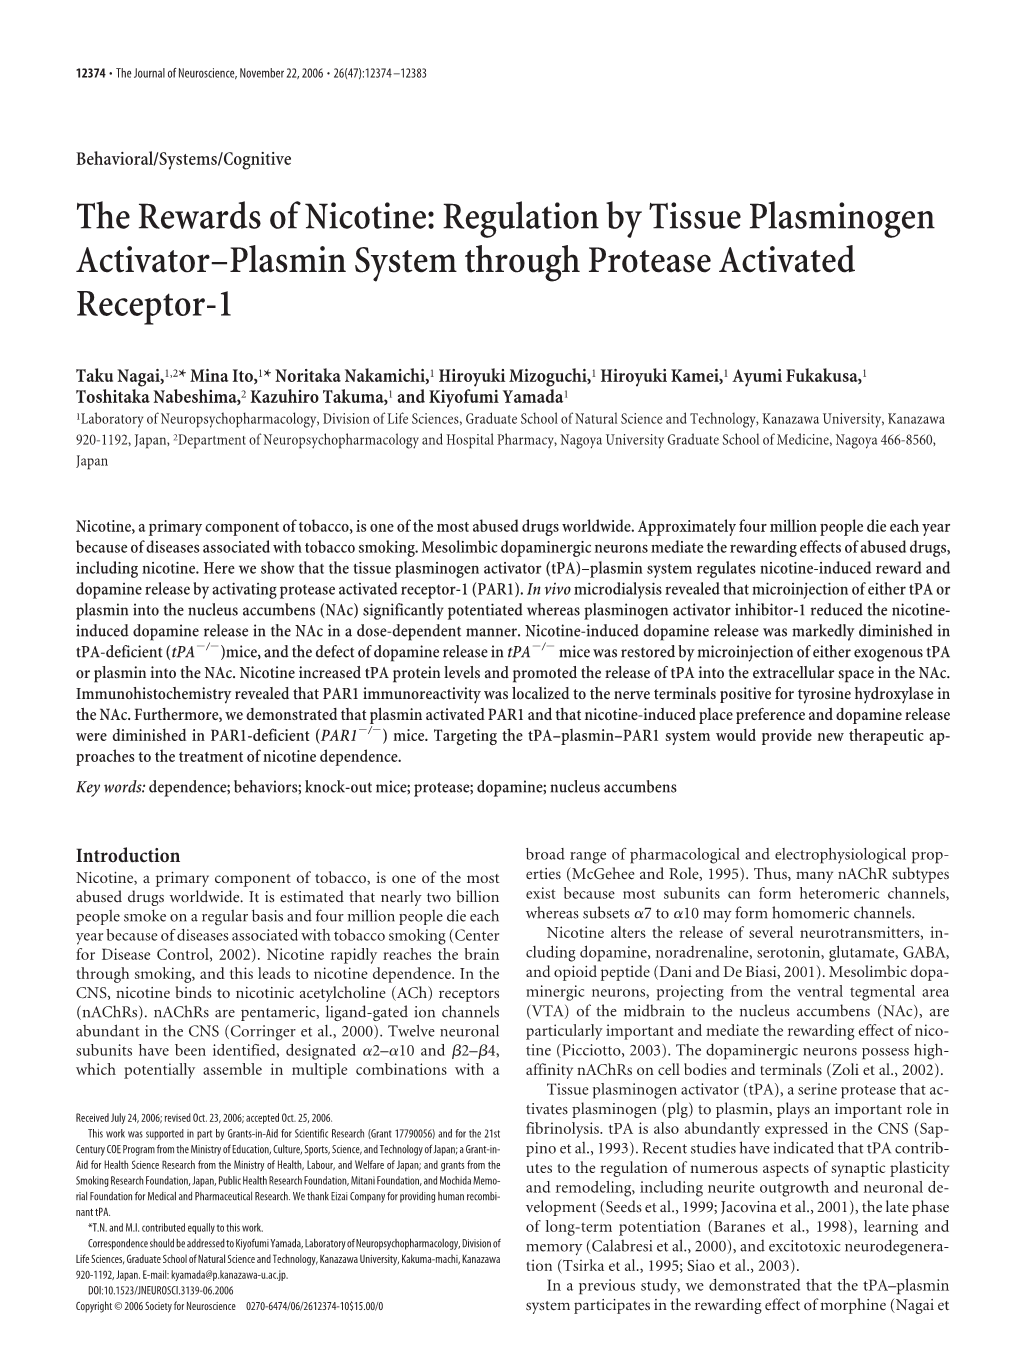 The Rewards of Nicotine: Regulation by Tissue Plasminogen Activator–Plasmin System Through Protease Activated Receptor-1